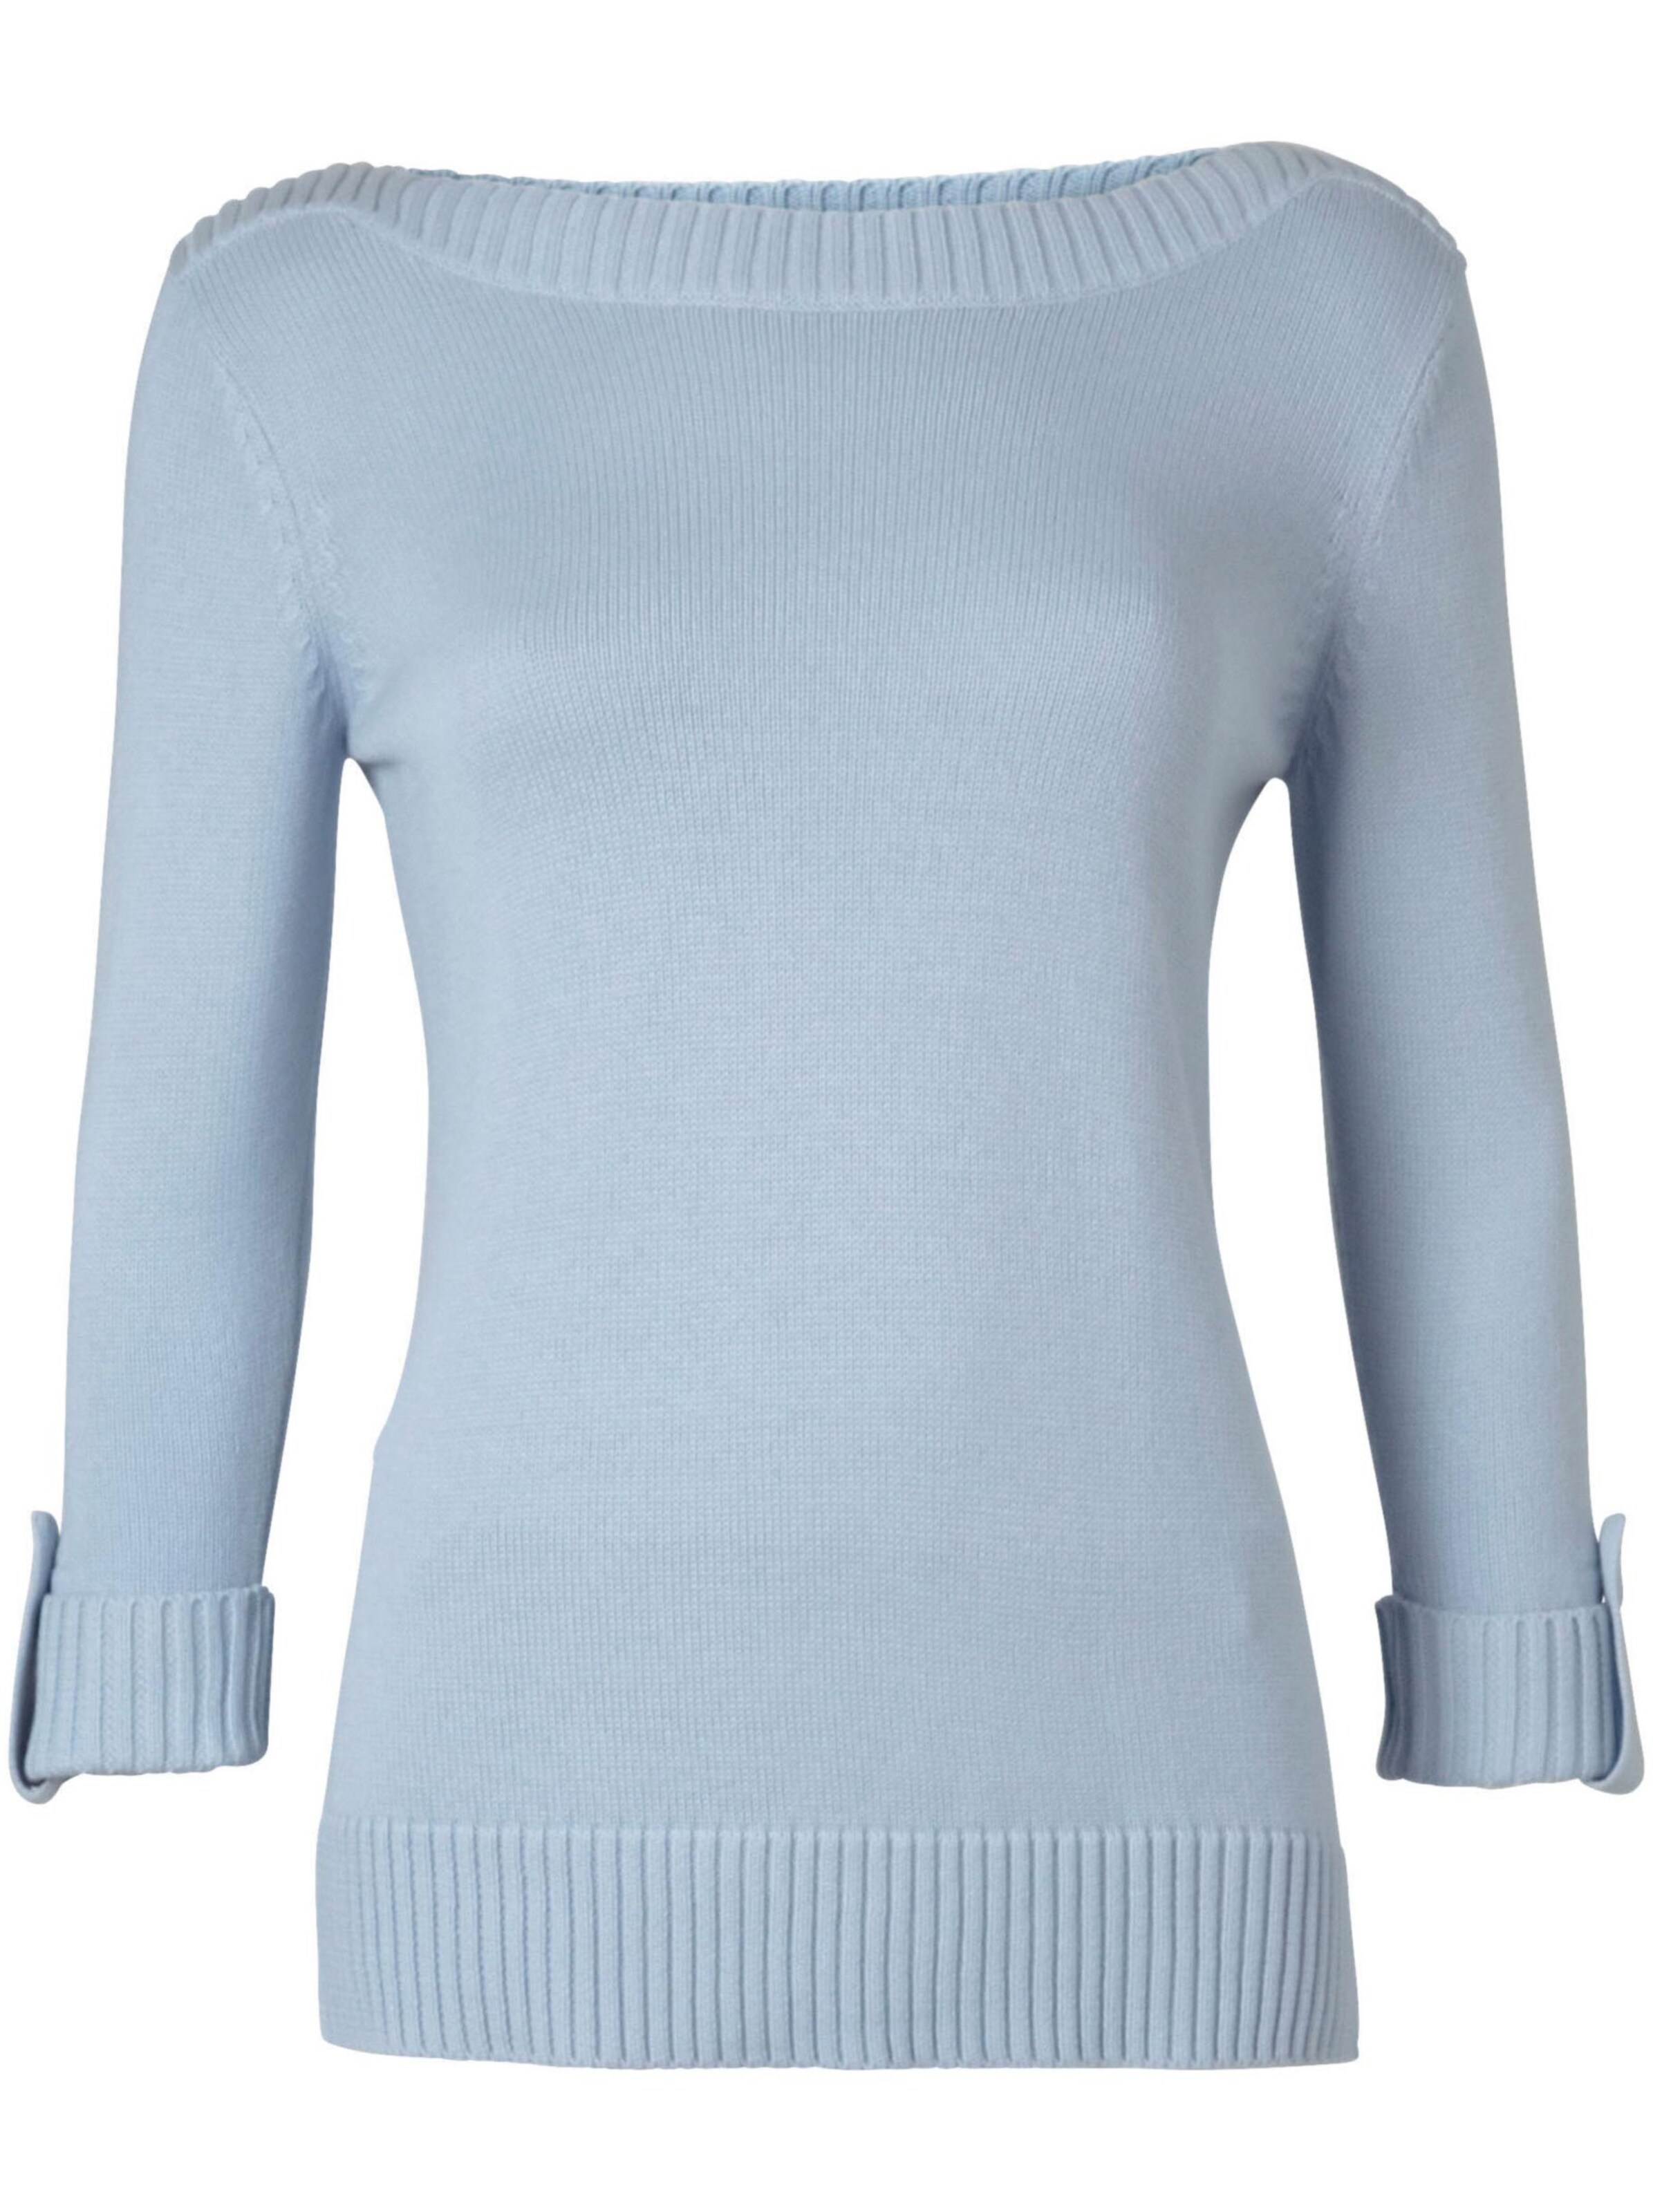 Damenmode Pullover 3/4 Arm-Pullover in eisblau 